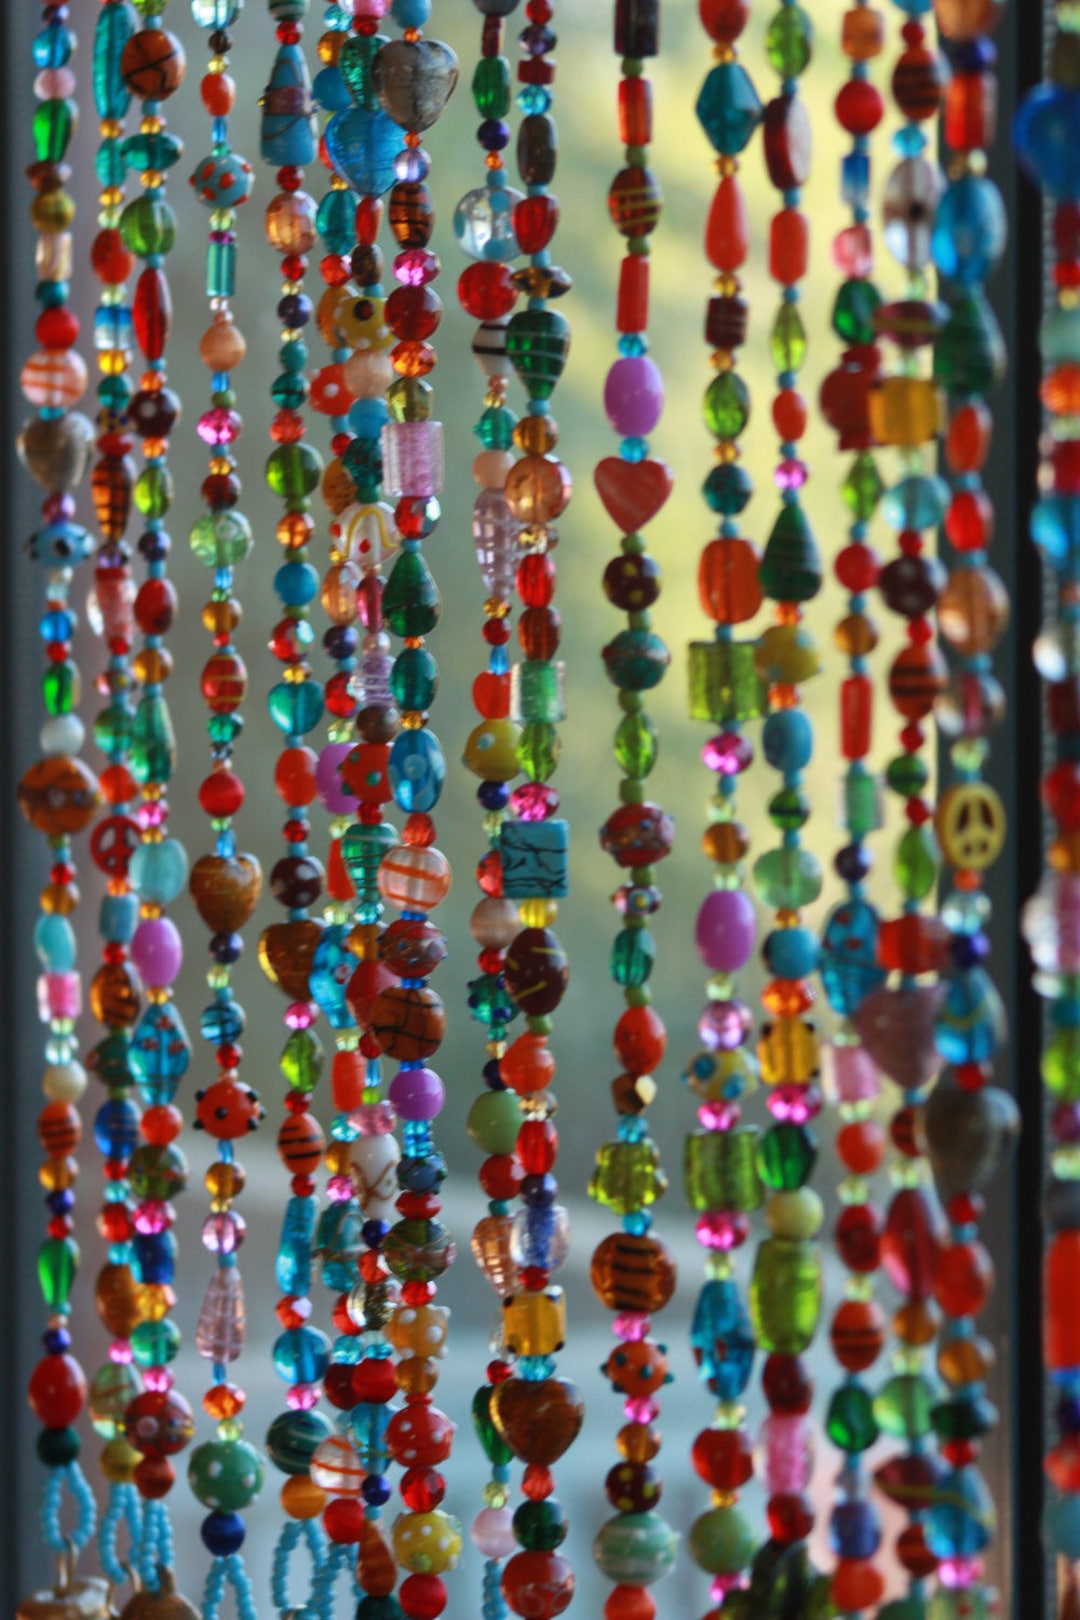 Rasmy Home Decors Customized Crystal Beads Curtain Window Curtain-beaded  Door Curtain-hanging Door Beads-beaded Wall Hanging-bohemian Art -   Denmark